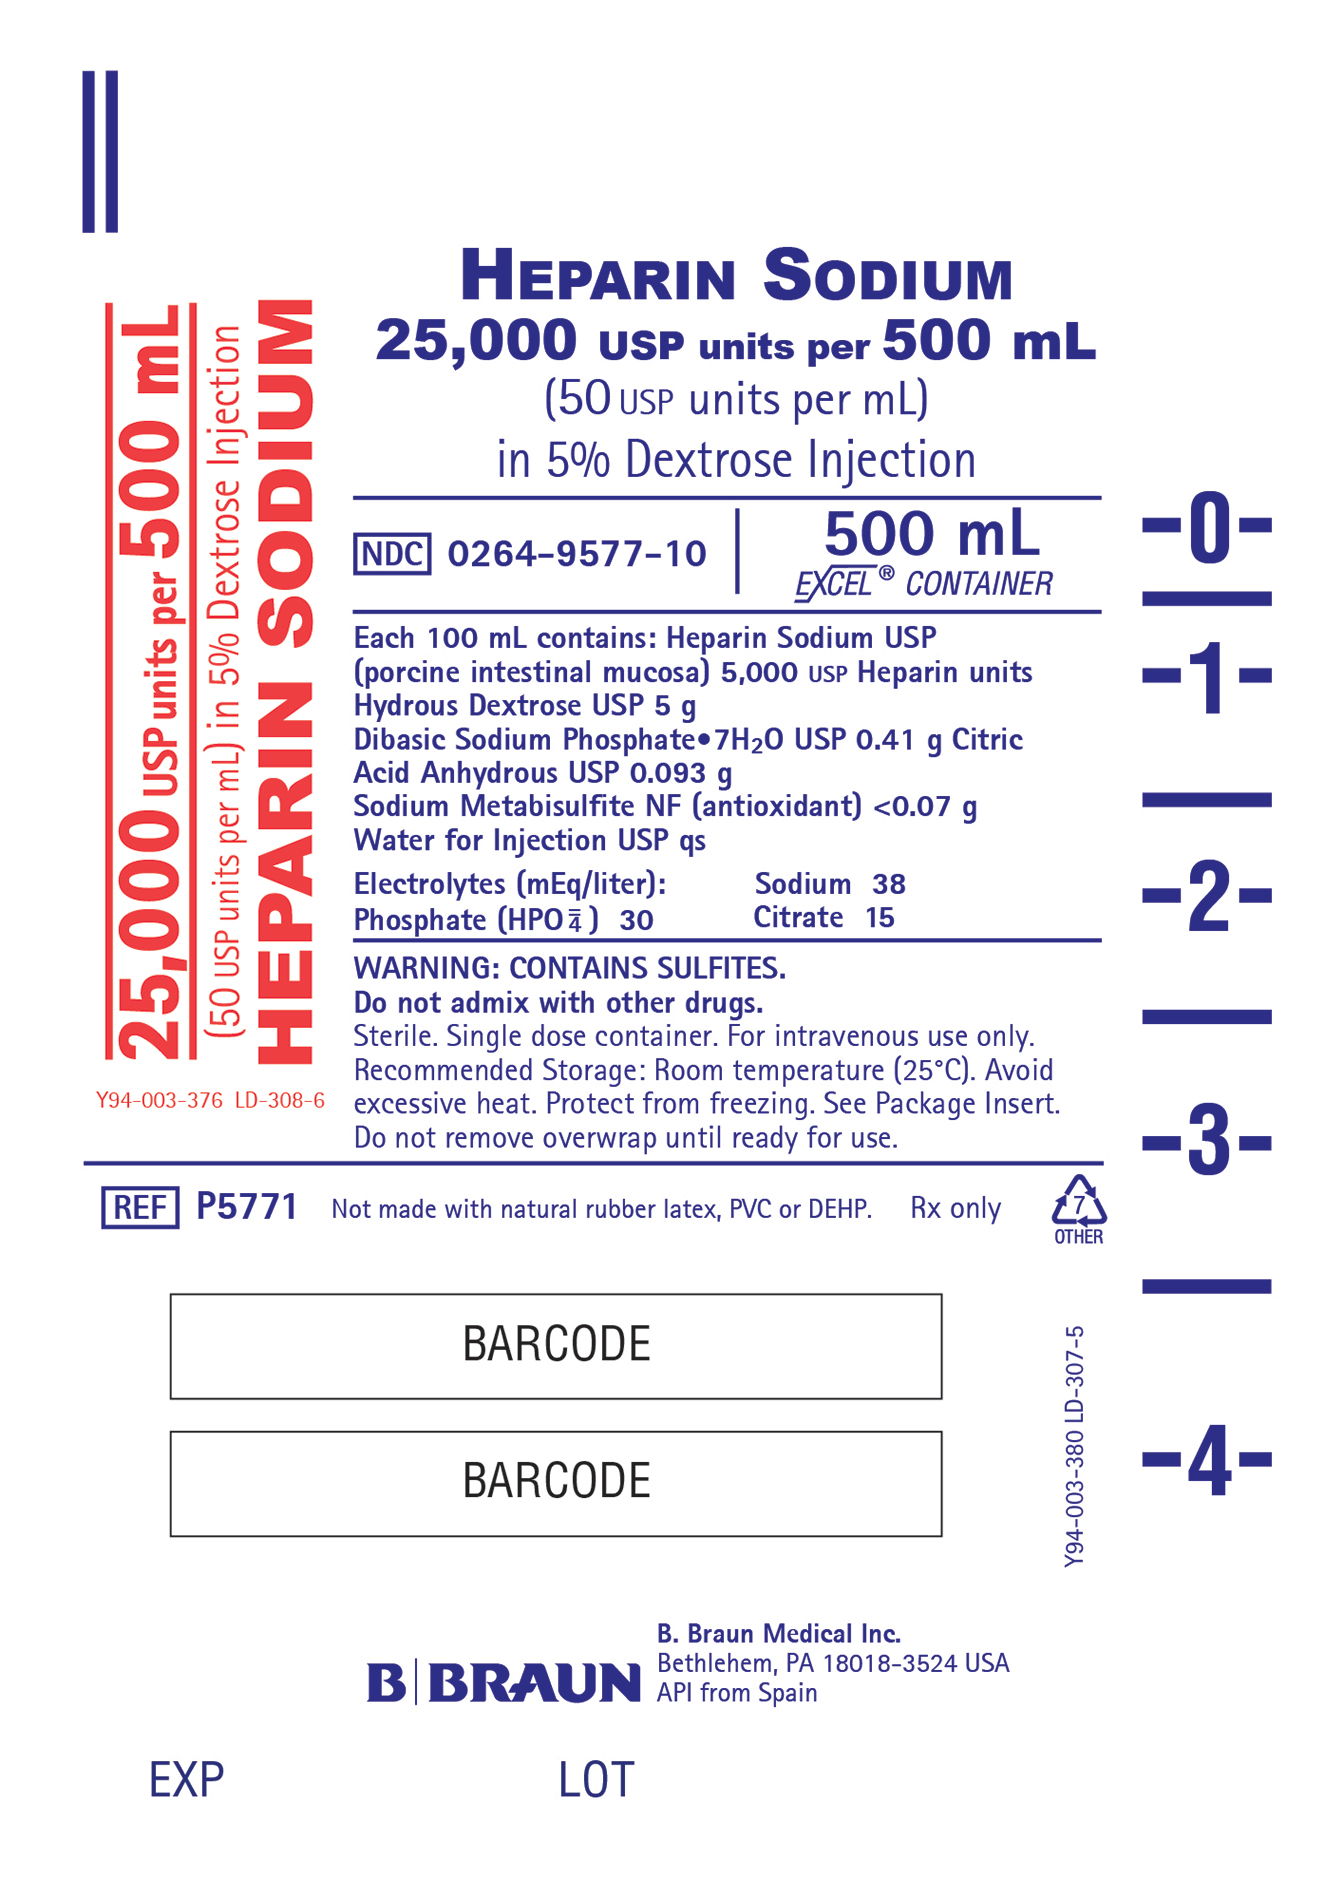 HEPARIN SODIUM in 5% Dextrose Injection 25,000 USP units per 500 mL